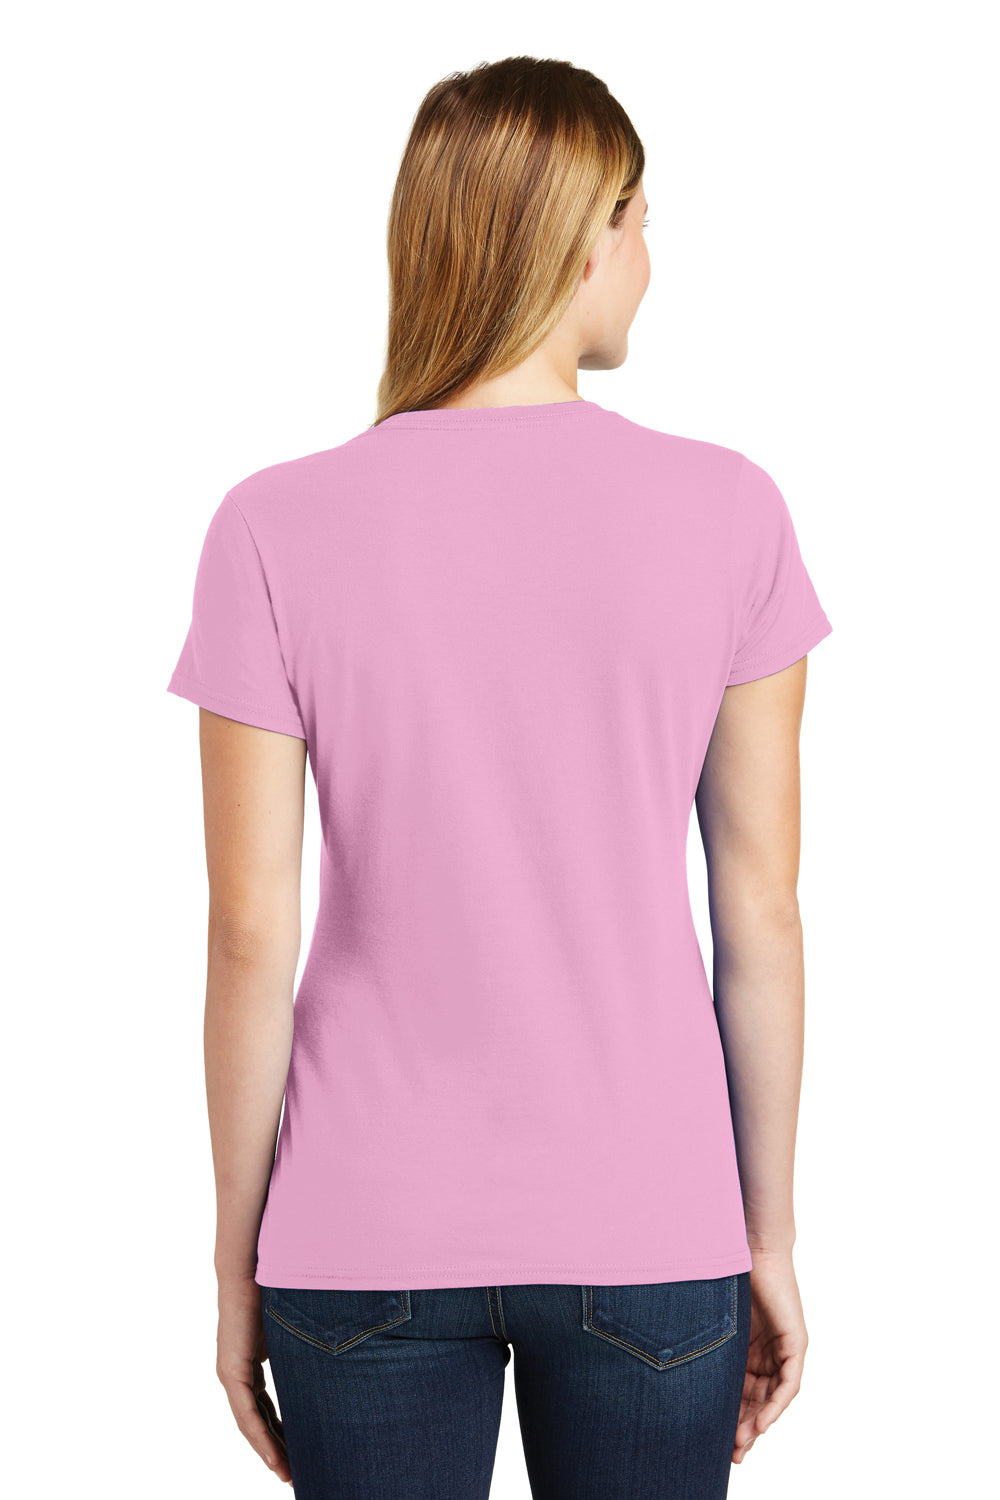 Port & Company LPC450 Womens Fan Favorite Short Sleeve Crewneck T-Shirt Candy Pink Back